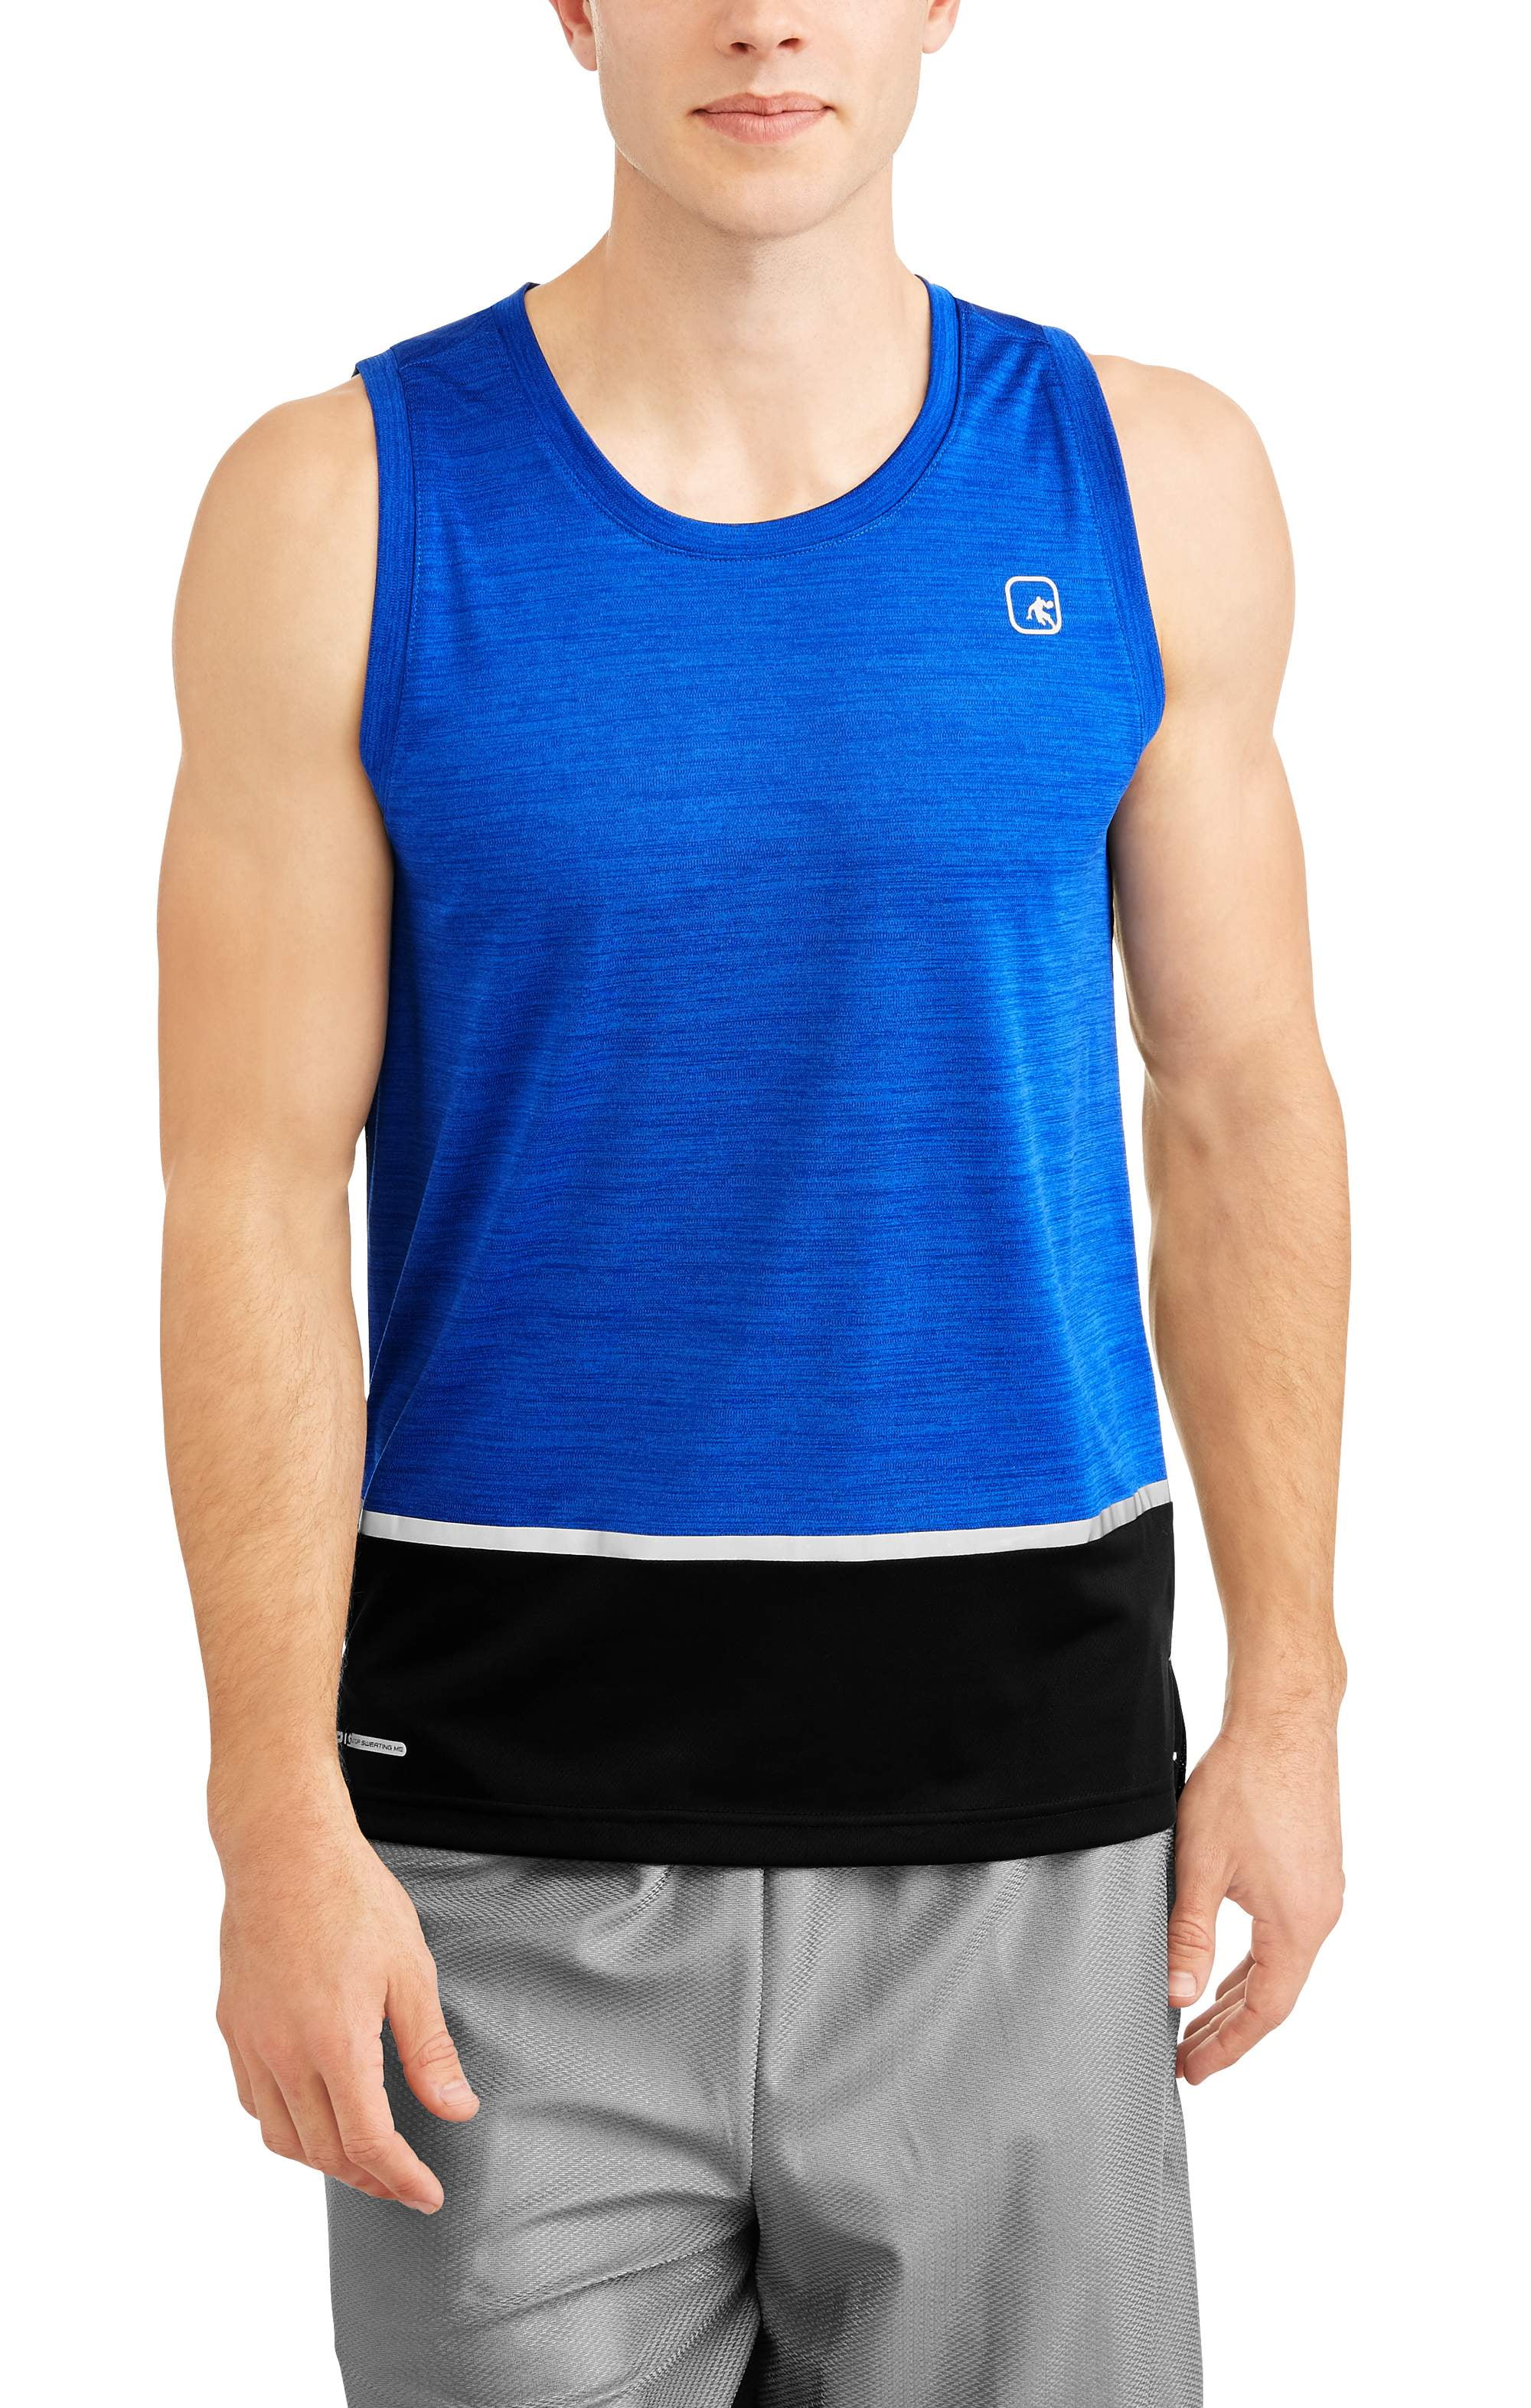 Men's Half-Court Performance Workout Tank Top Activewear Shirt ...